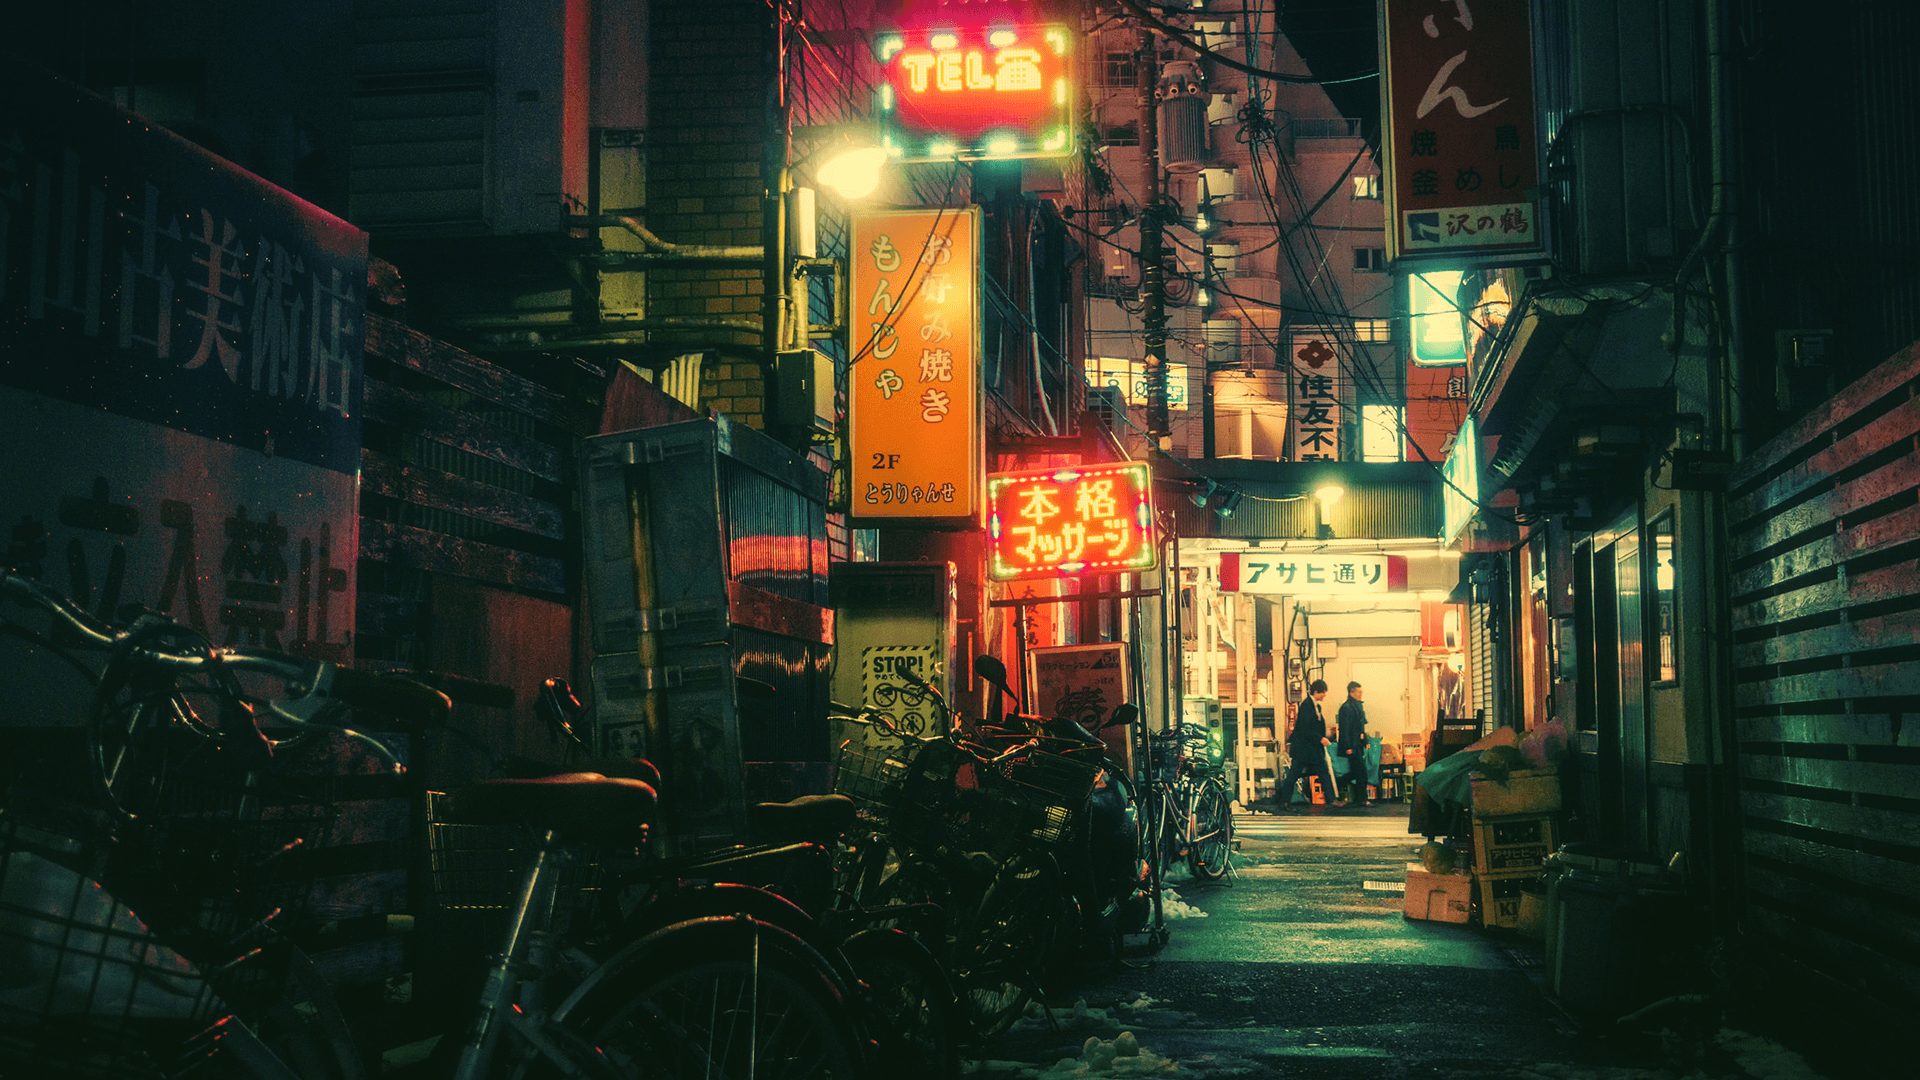 Tokyo Night Photography Bicycle Backstreet Neon Sign People Japan Low Light 1920x1080